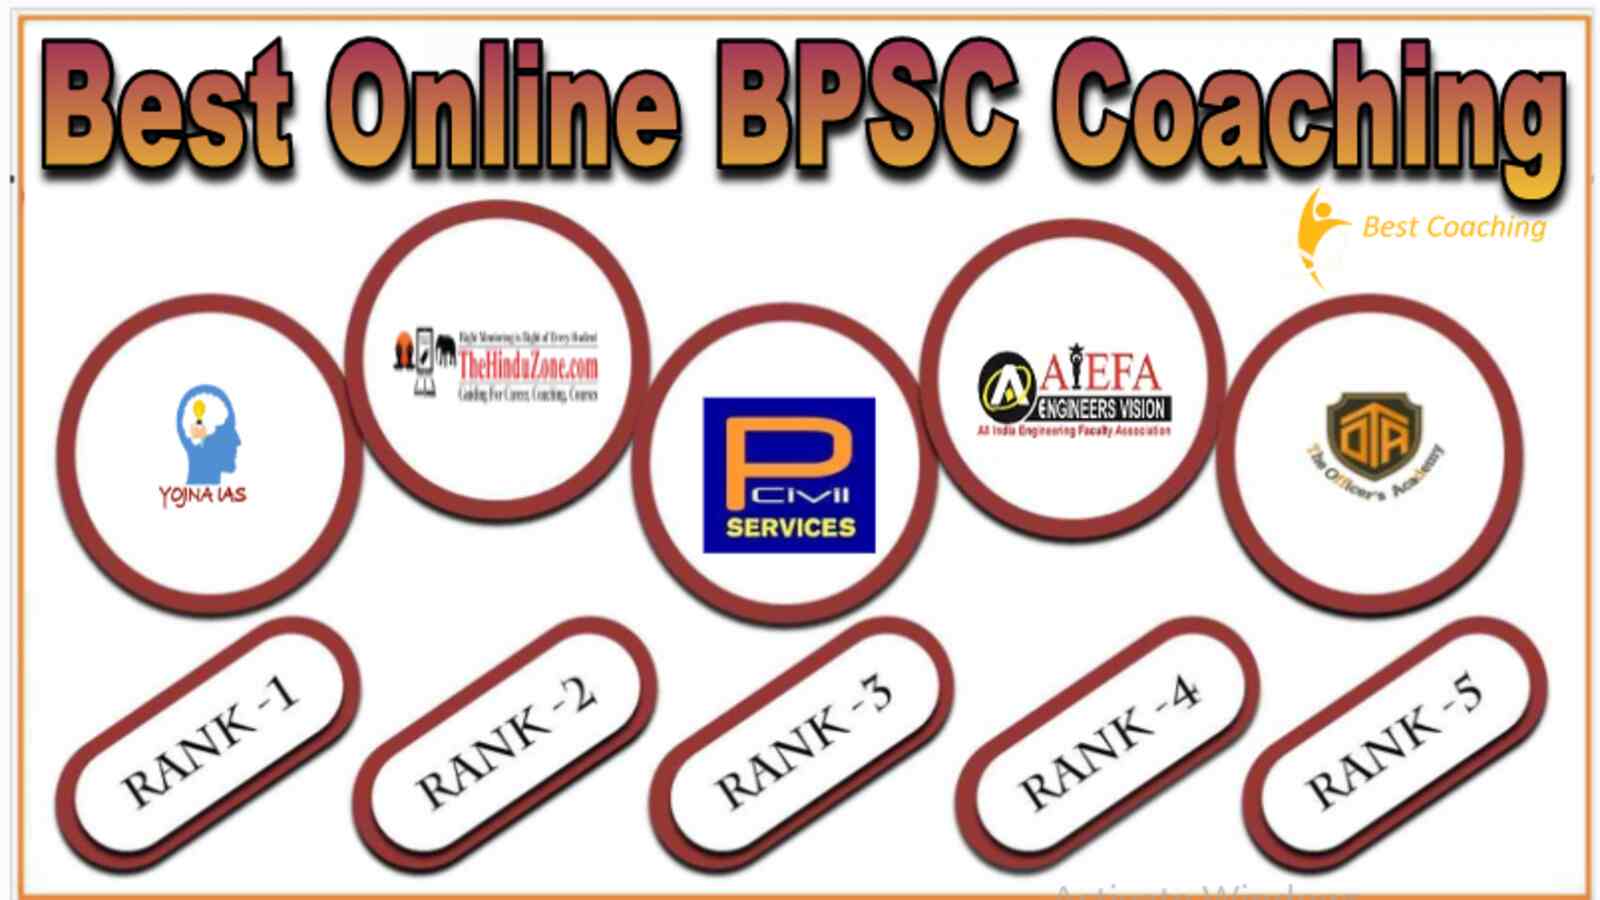 Best Online BPSC Coaching